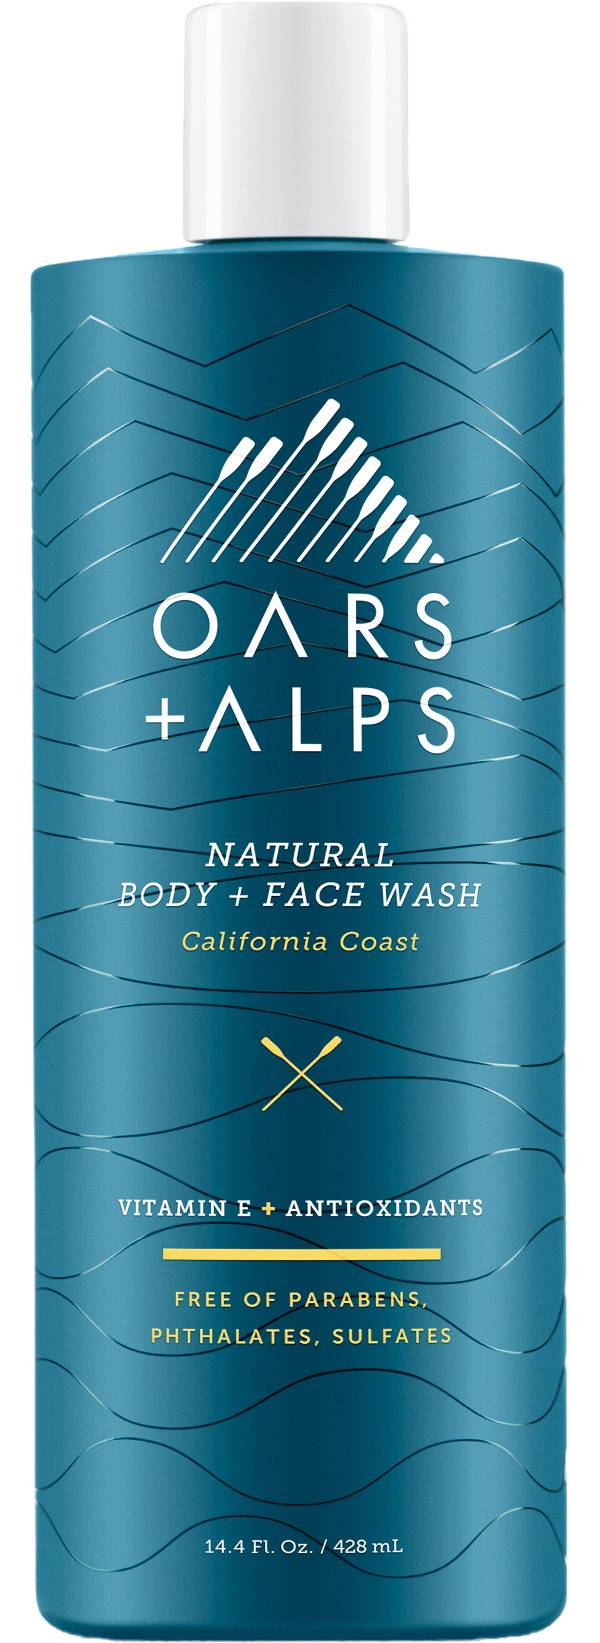 Oars + Alps Men's California Coast Body Wash product image